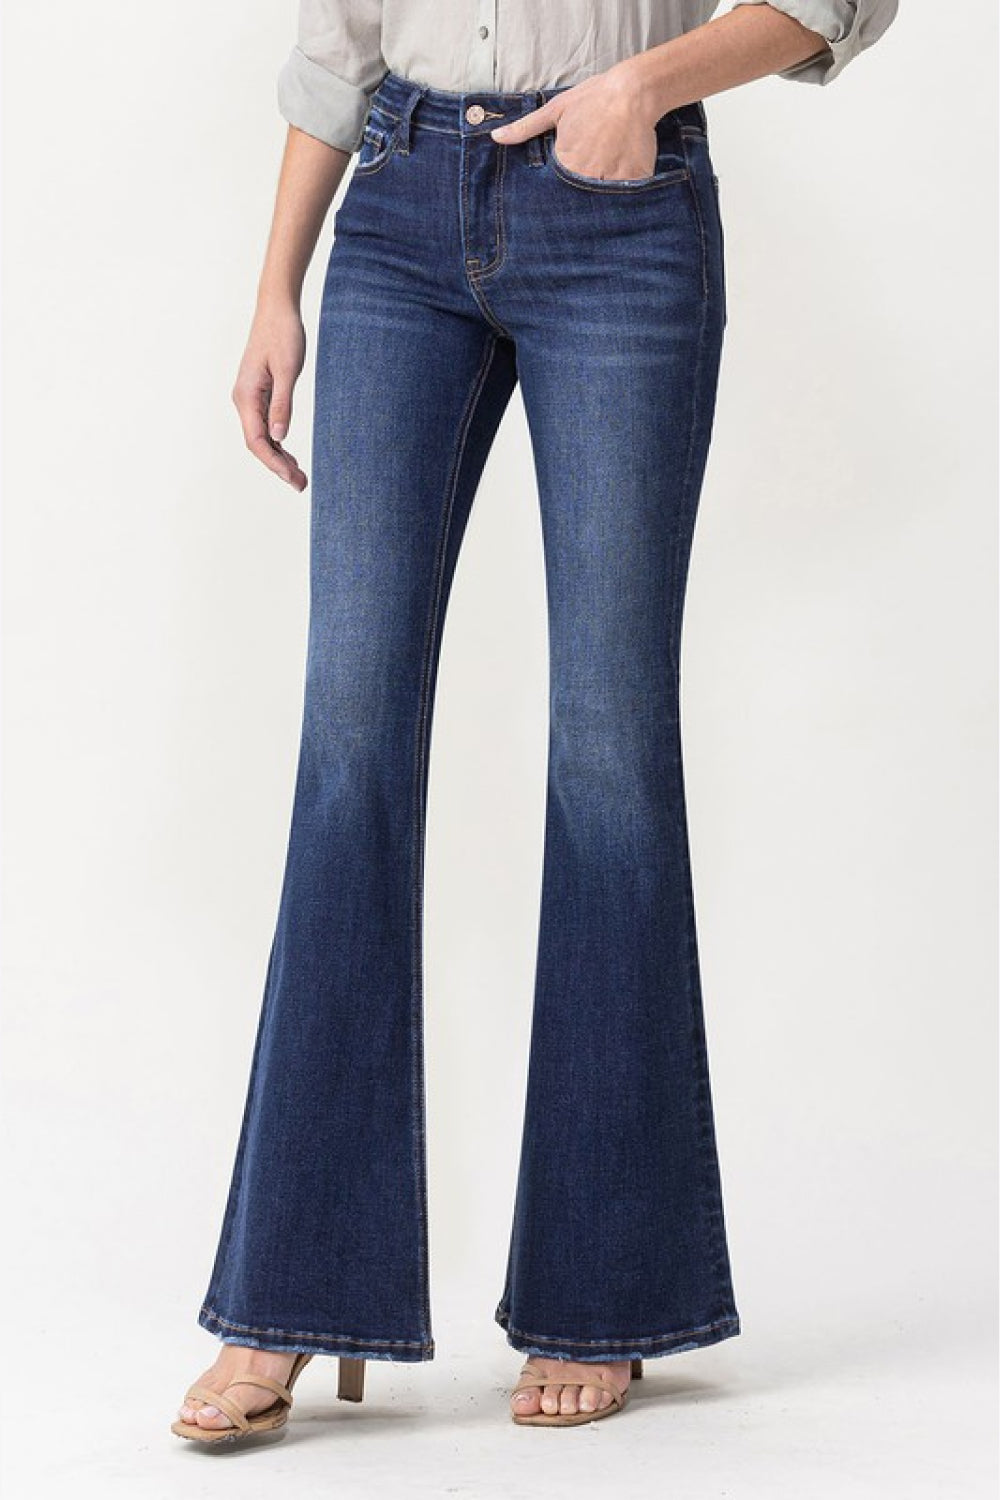 Lovervet Joanna Midrise Flare Jeans - Online Only